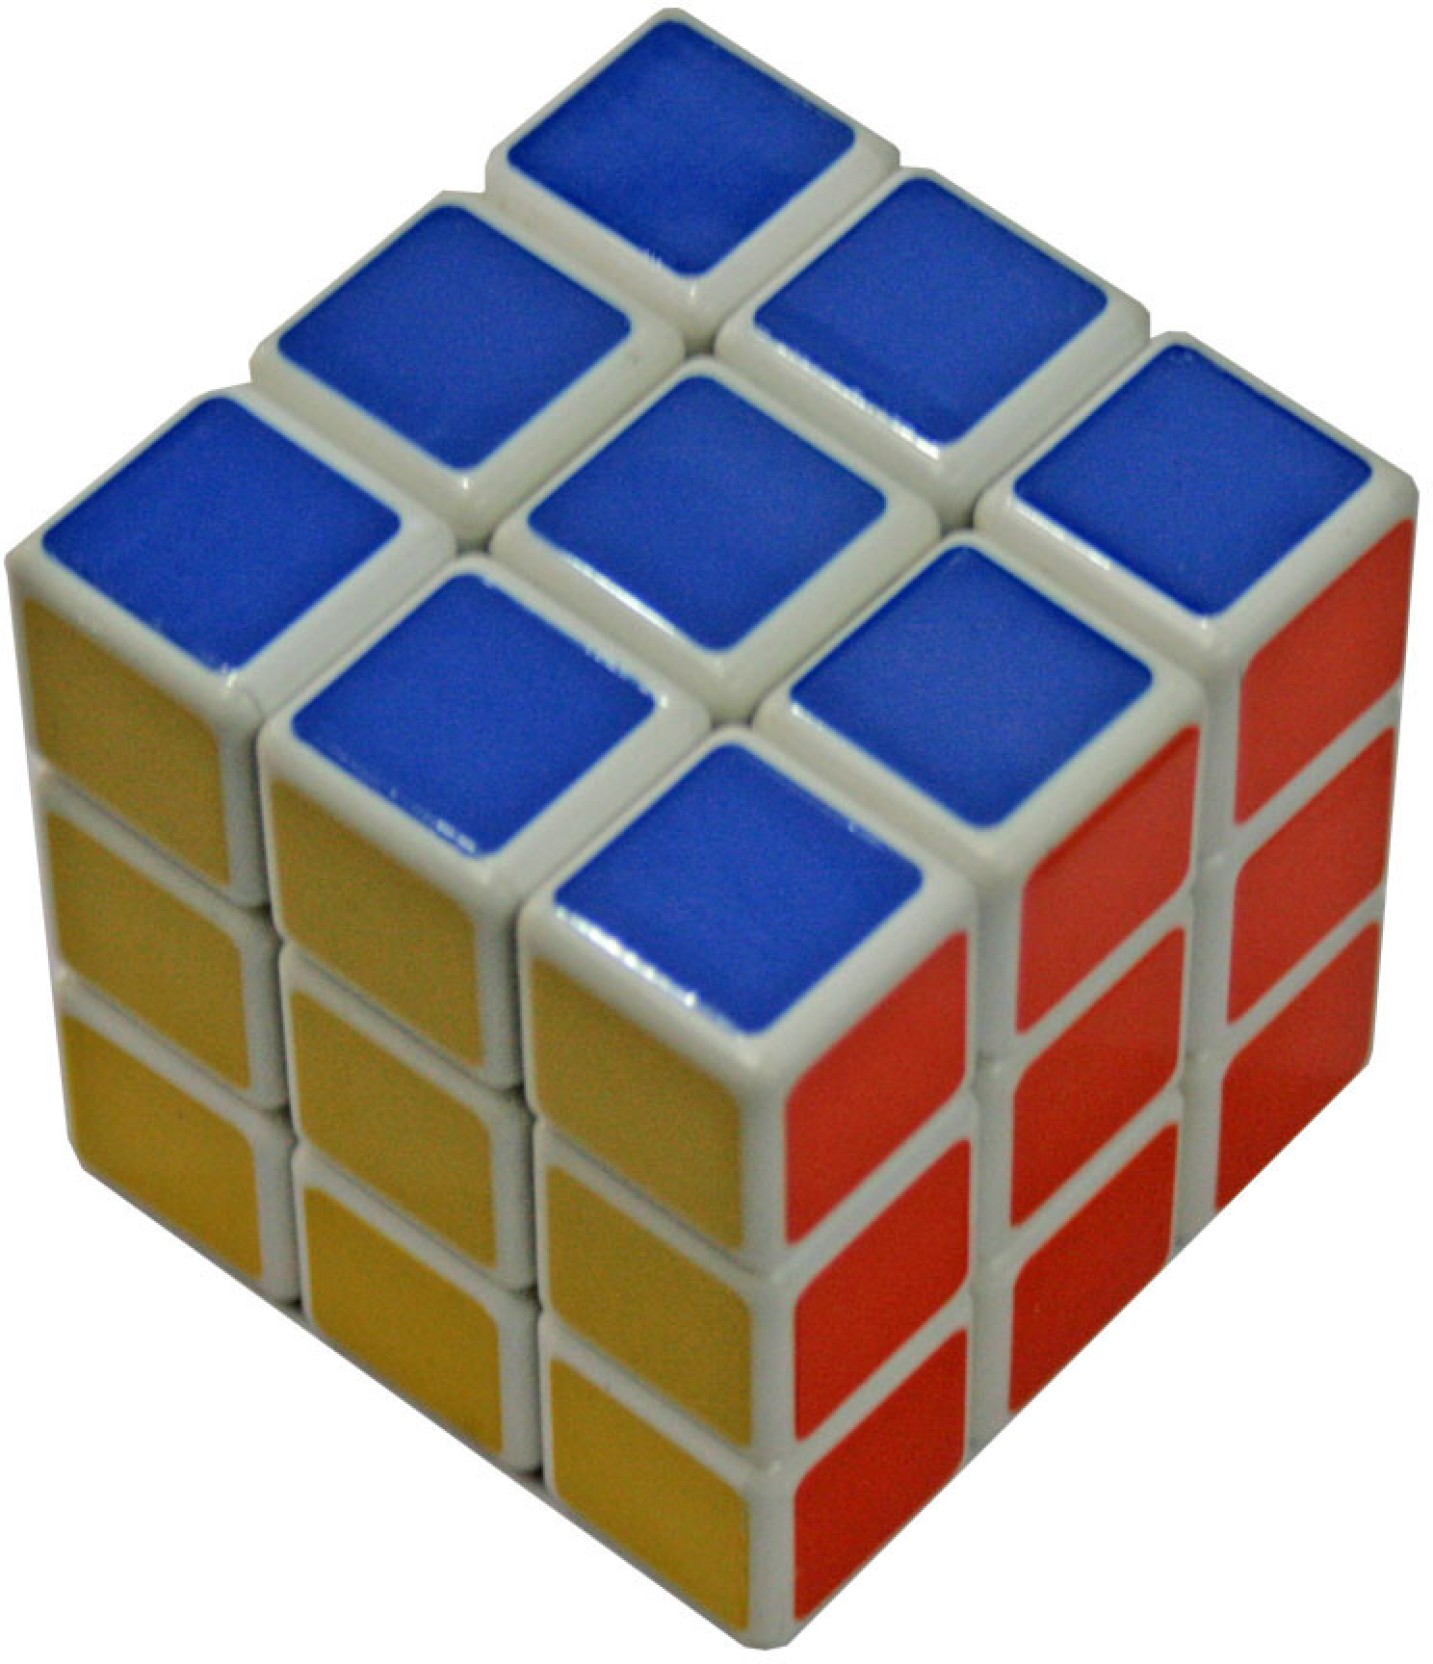 Кубик 3 3 11. Кубик Рубика 1x2x111. Rubik's Cube 3x3. Иви кубик Рубика. 3x3 Rubik's Cube solution.